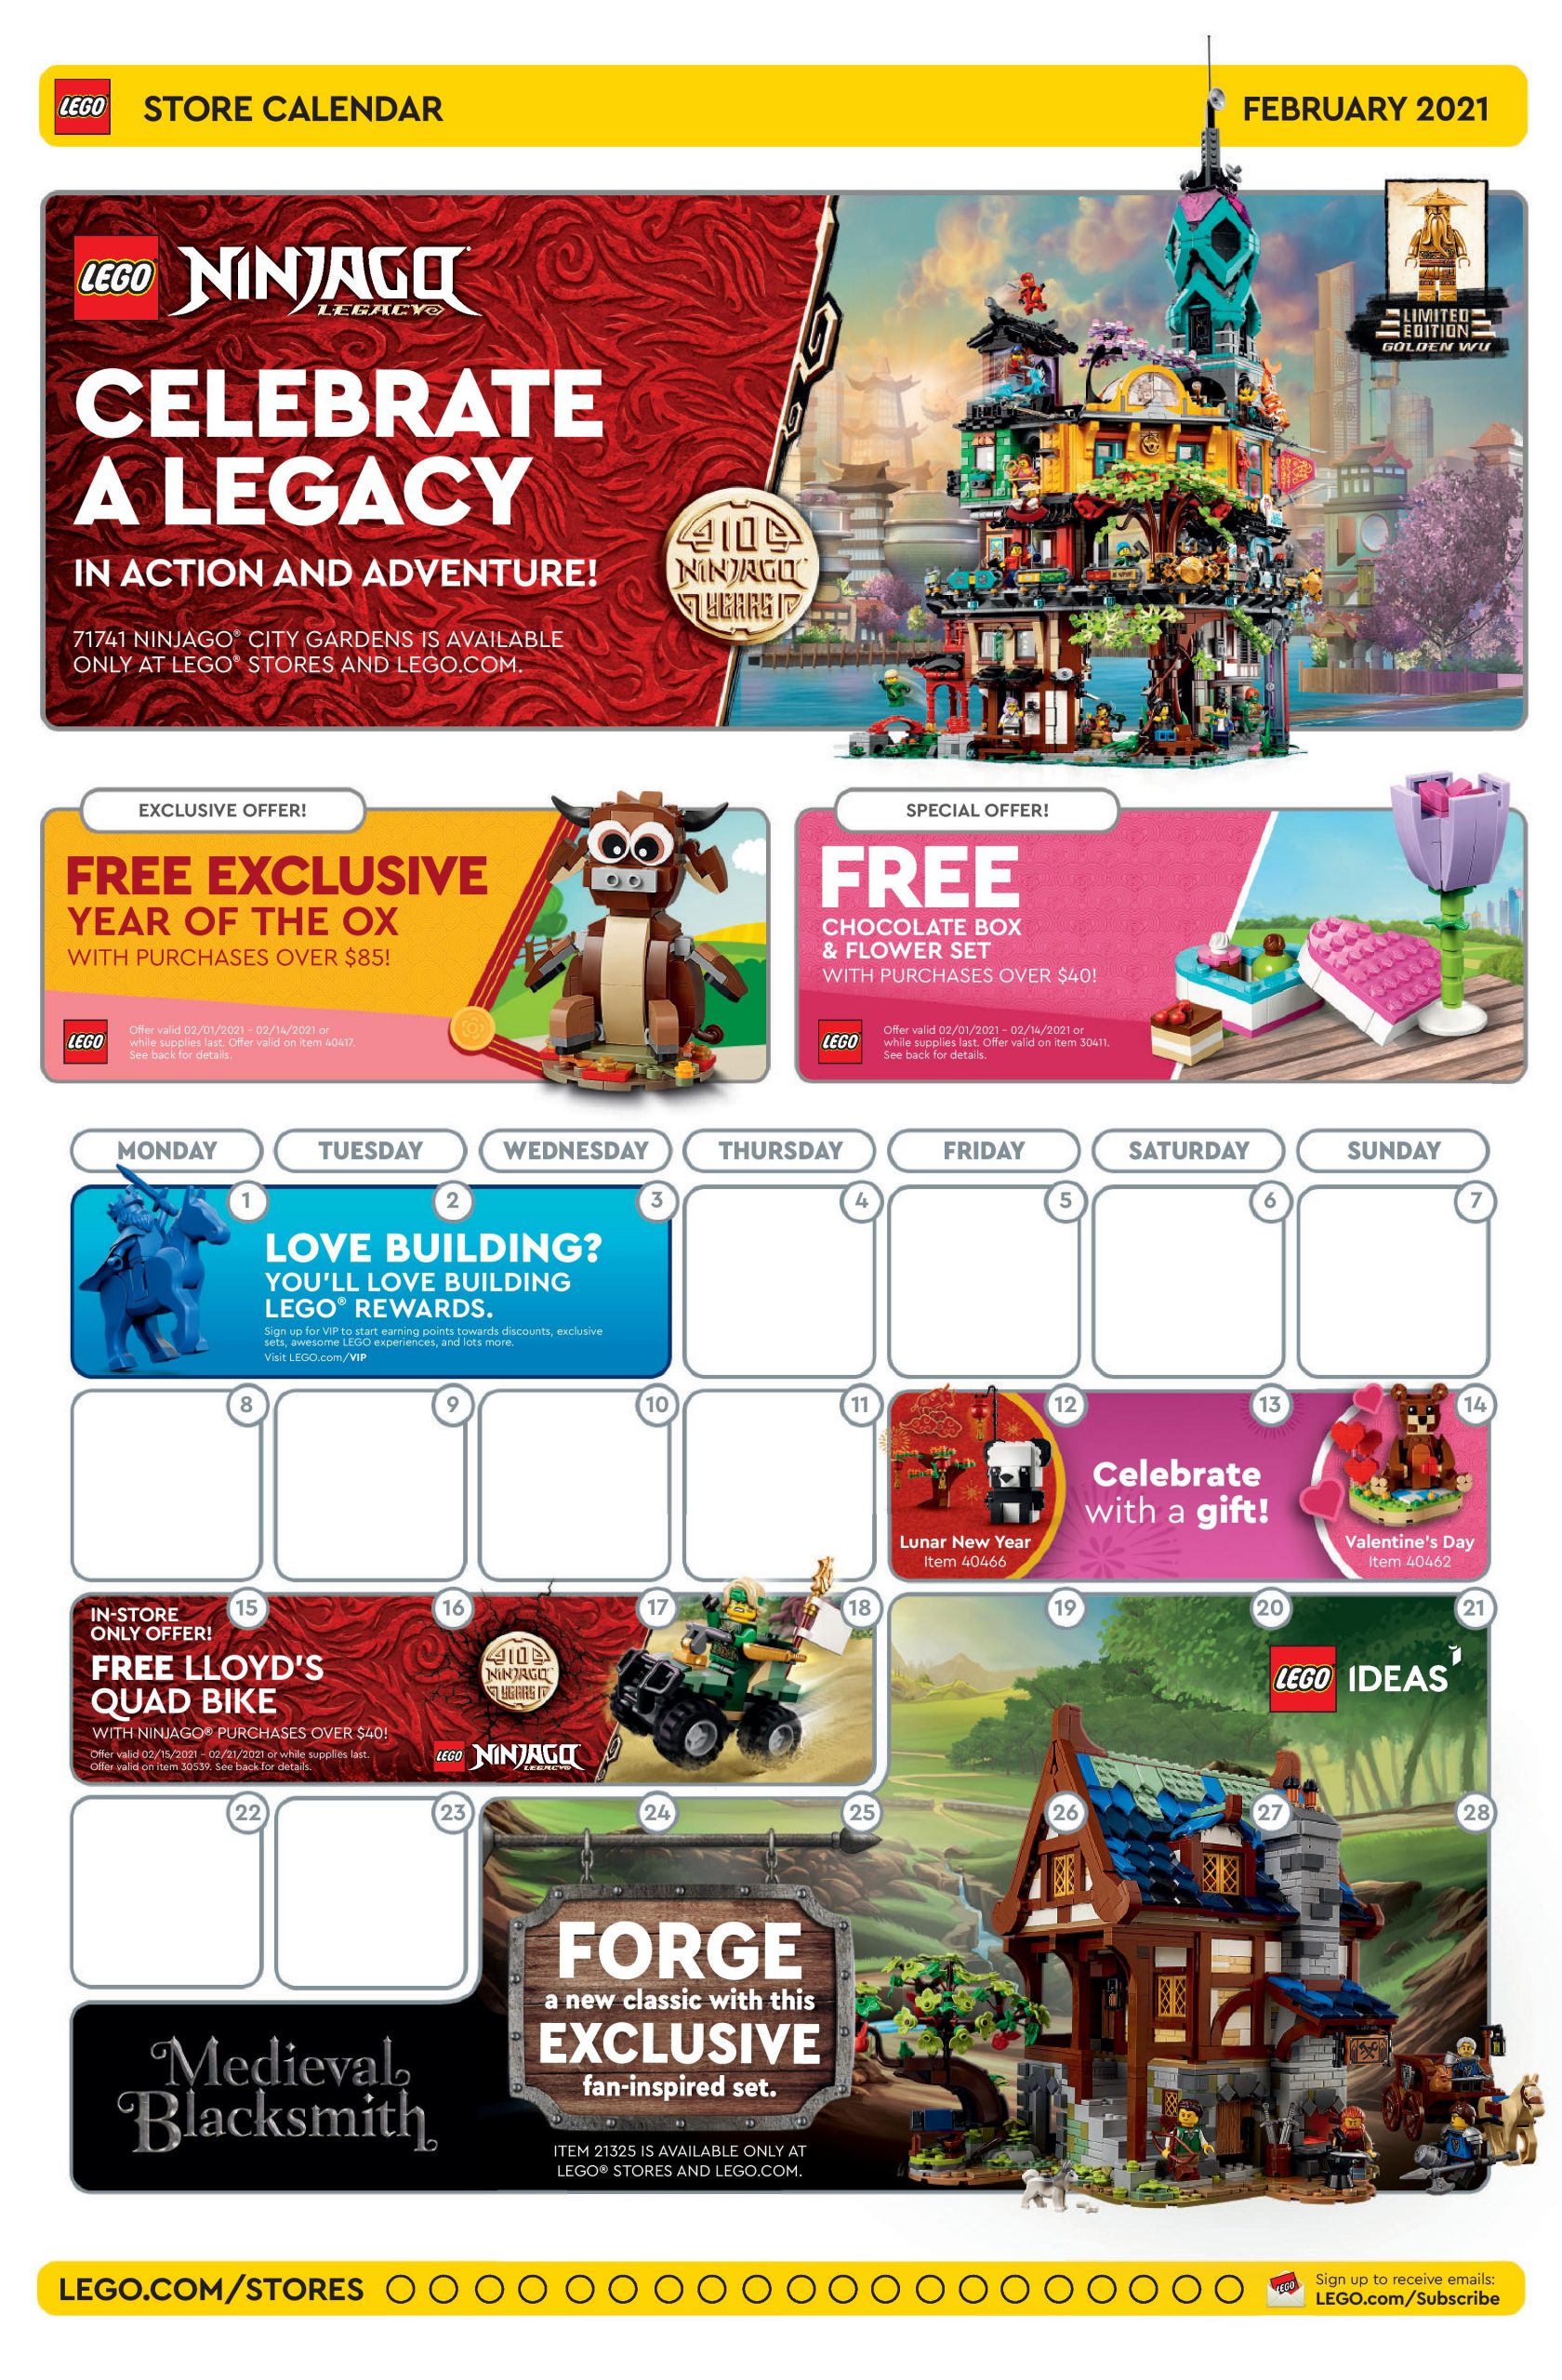 Lego February 2022 Calendar Lego February 2021 Store Calendar Promotions & Events - The Brick Fan